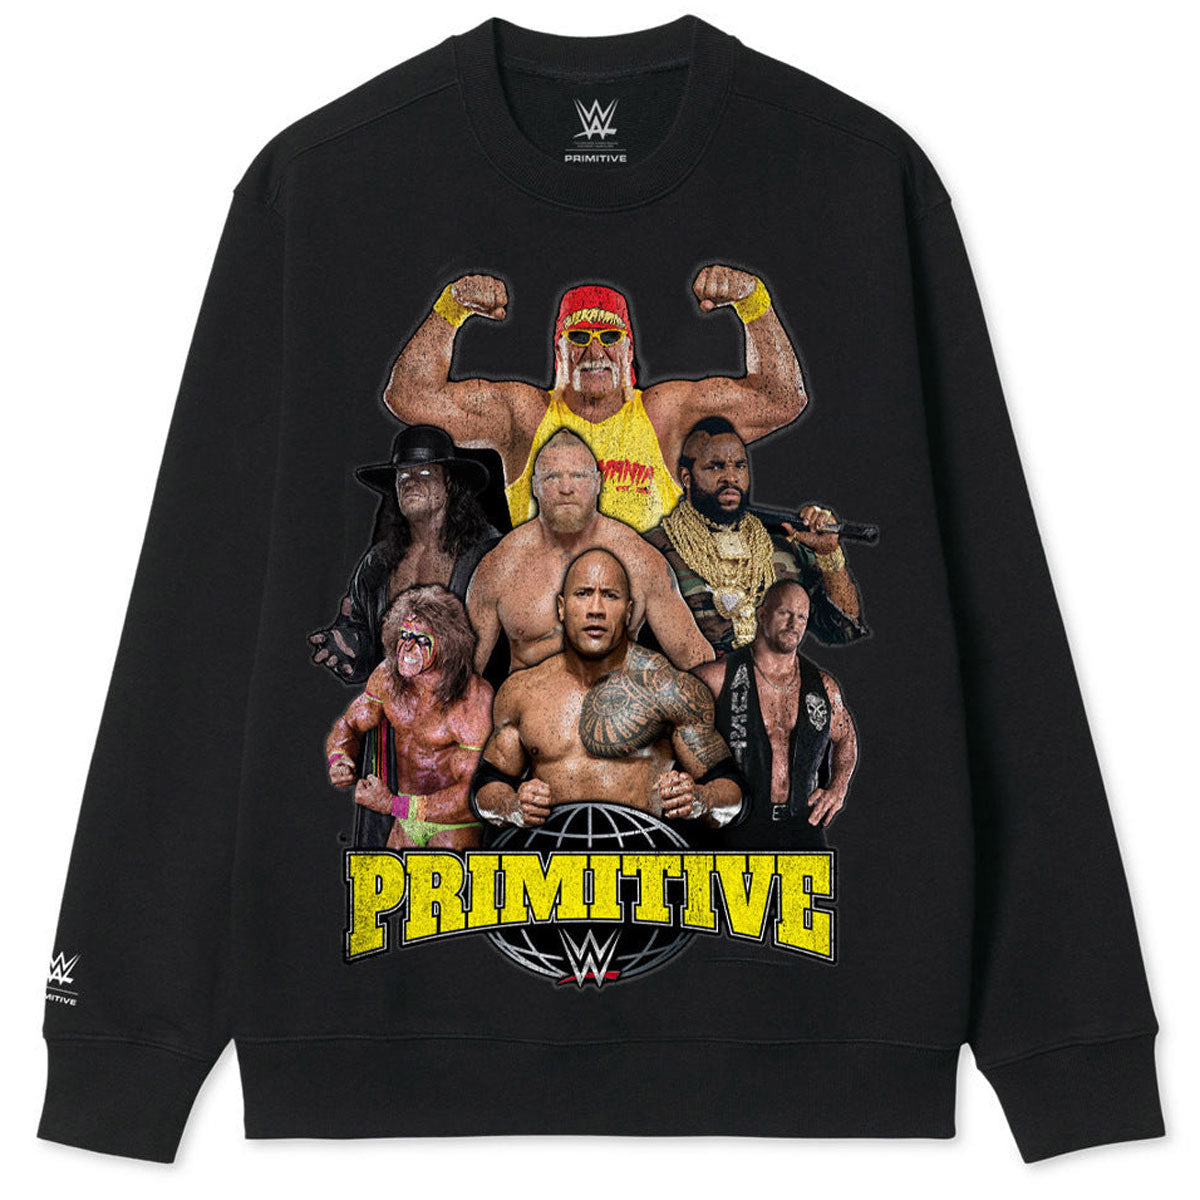 Primitive x WWE Mania Crewneck Sweatshirt - Black image 1